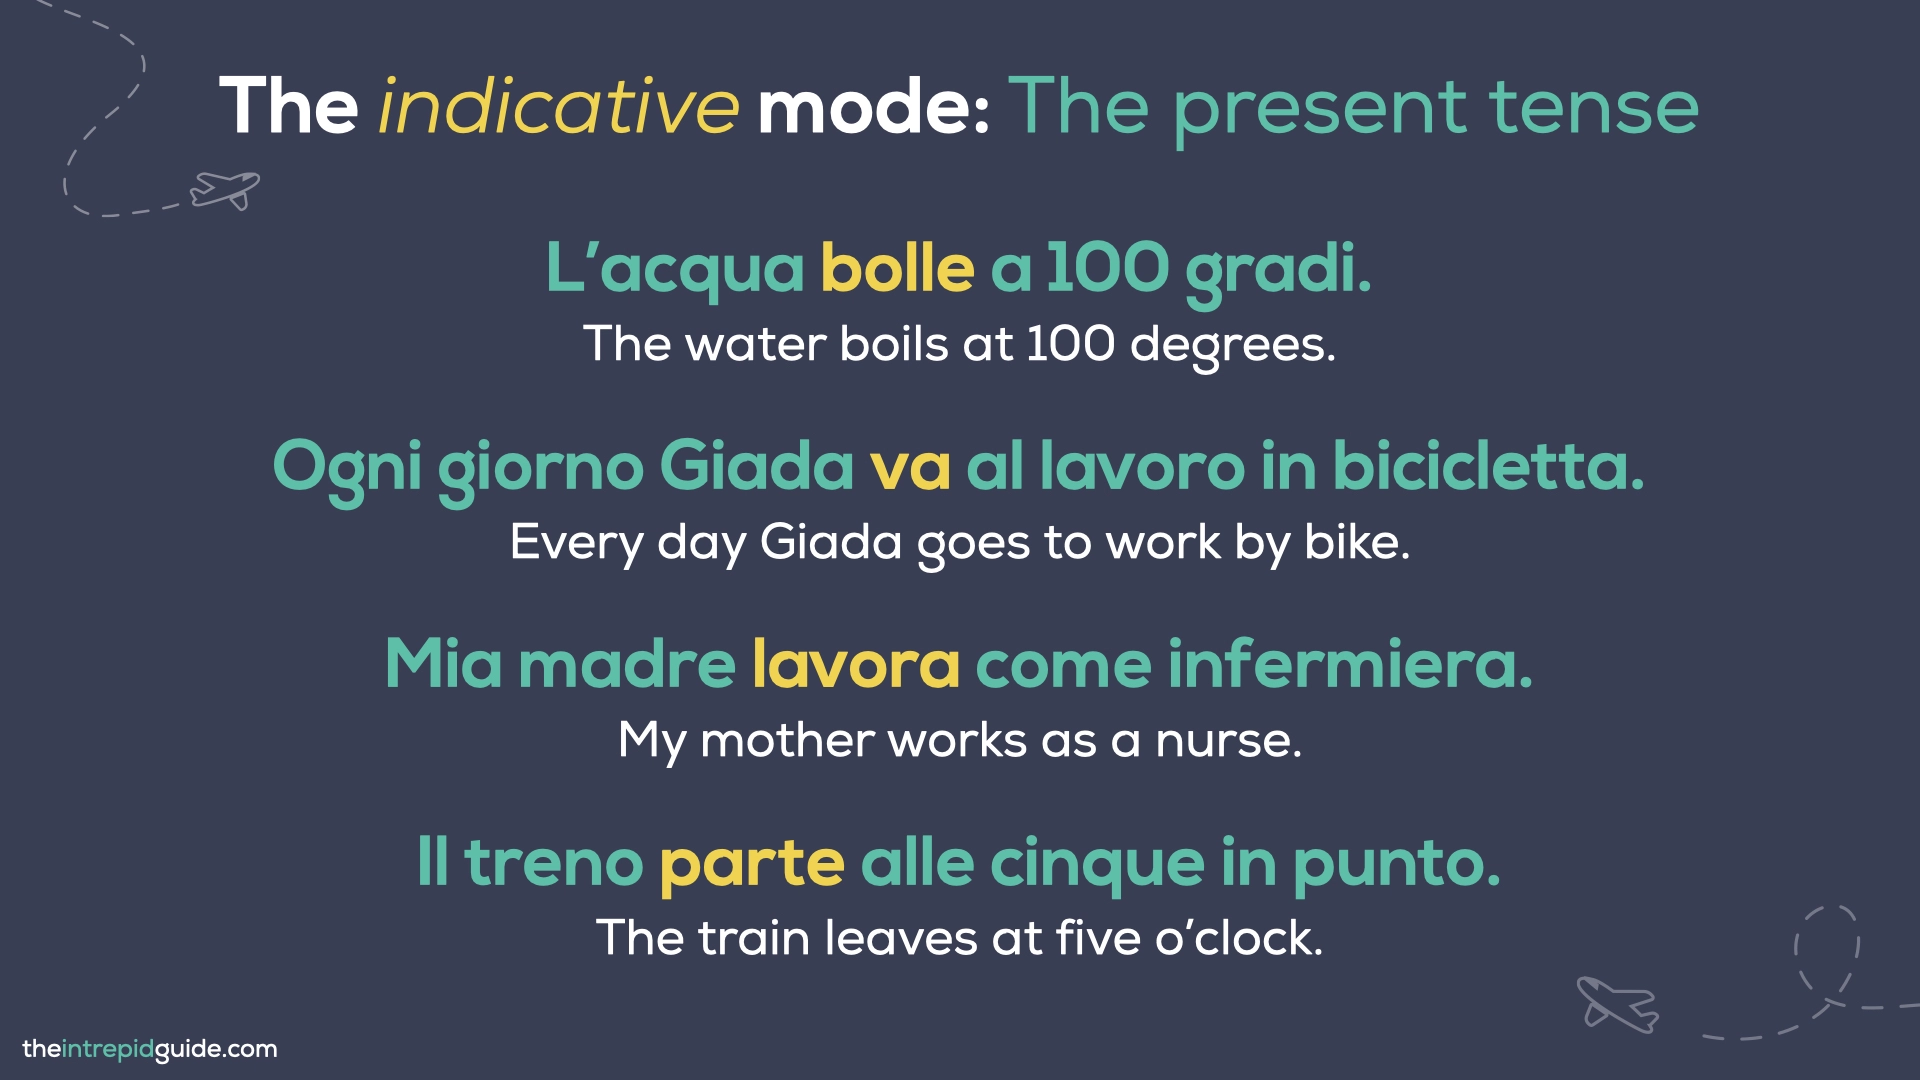 Italian tenses - The Indicative Mode - The Present Tense